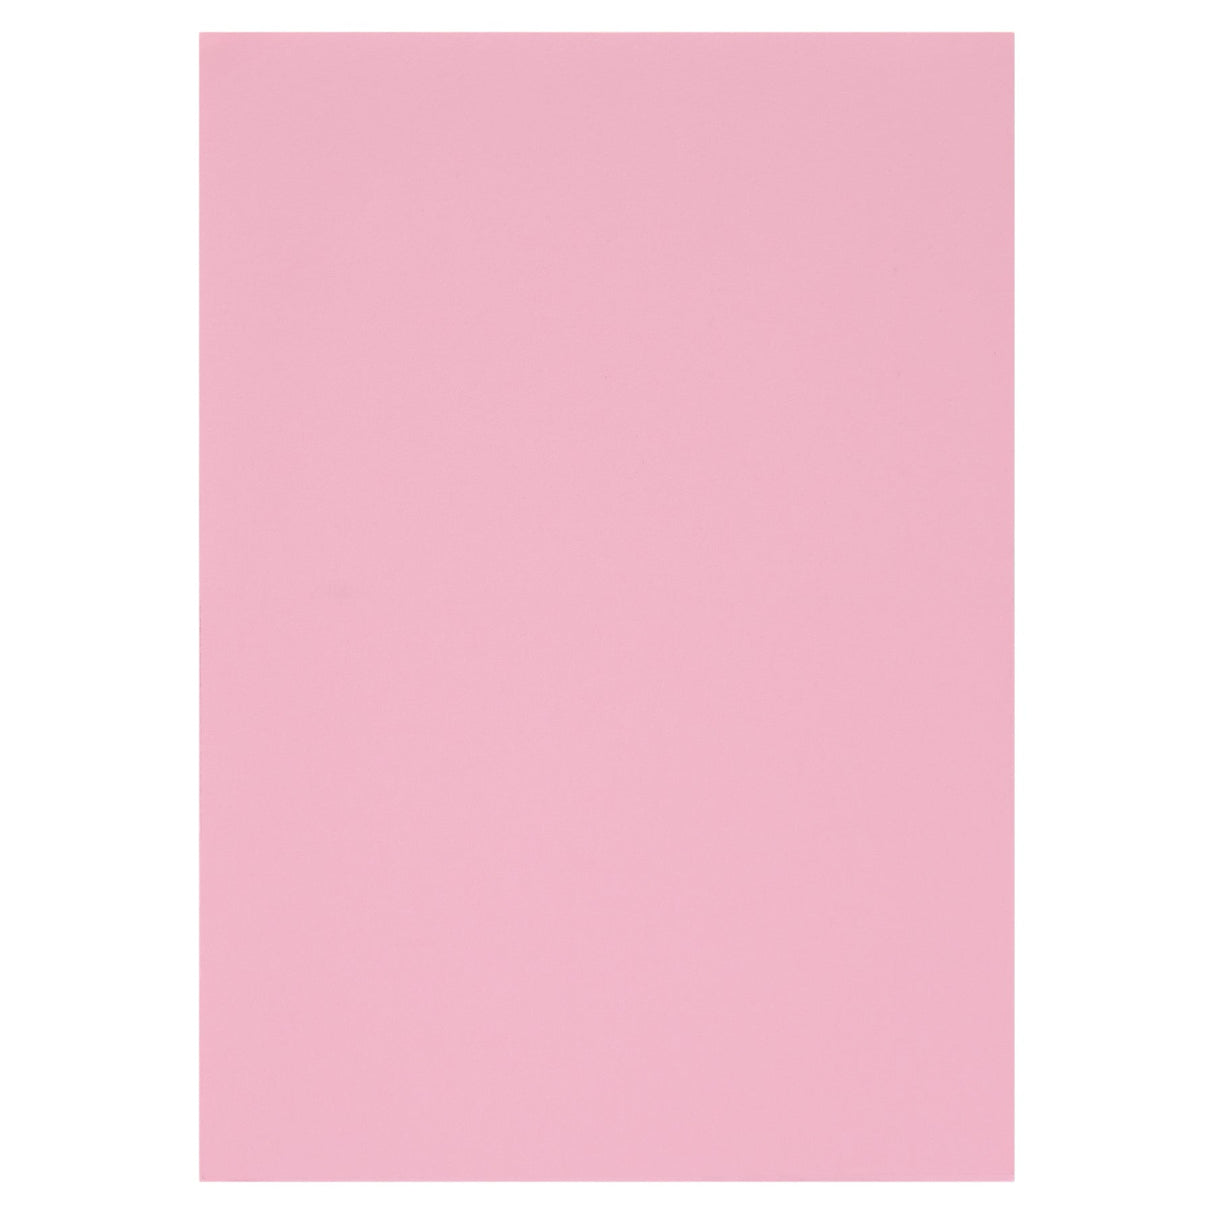 Premier Activity A4 Card - 160 gsm - Pink - 50 Sheets-Craft Paper & Card-Premier | Buy Online at Stationery Shop